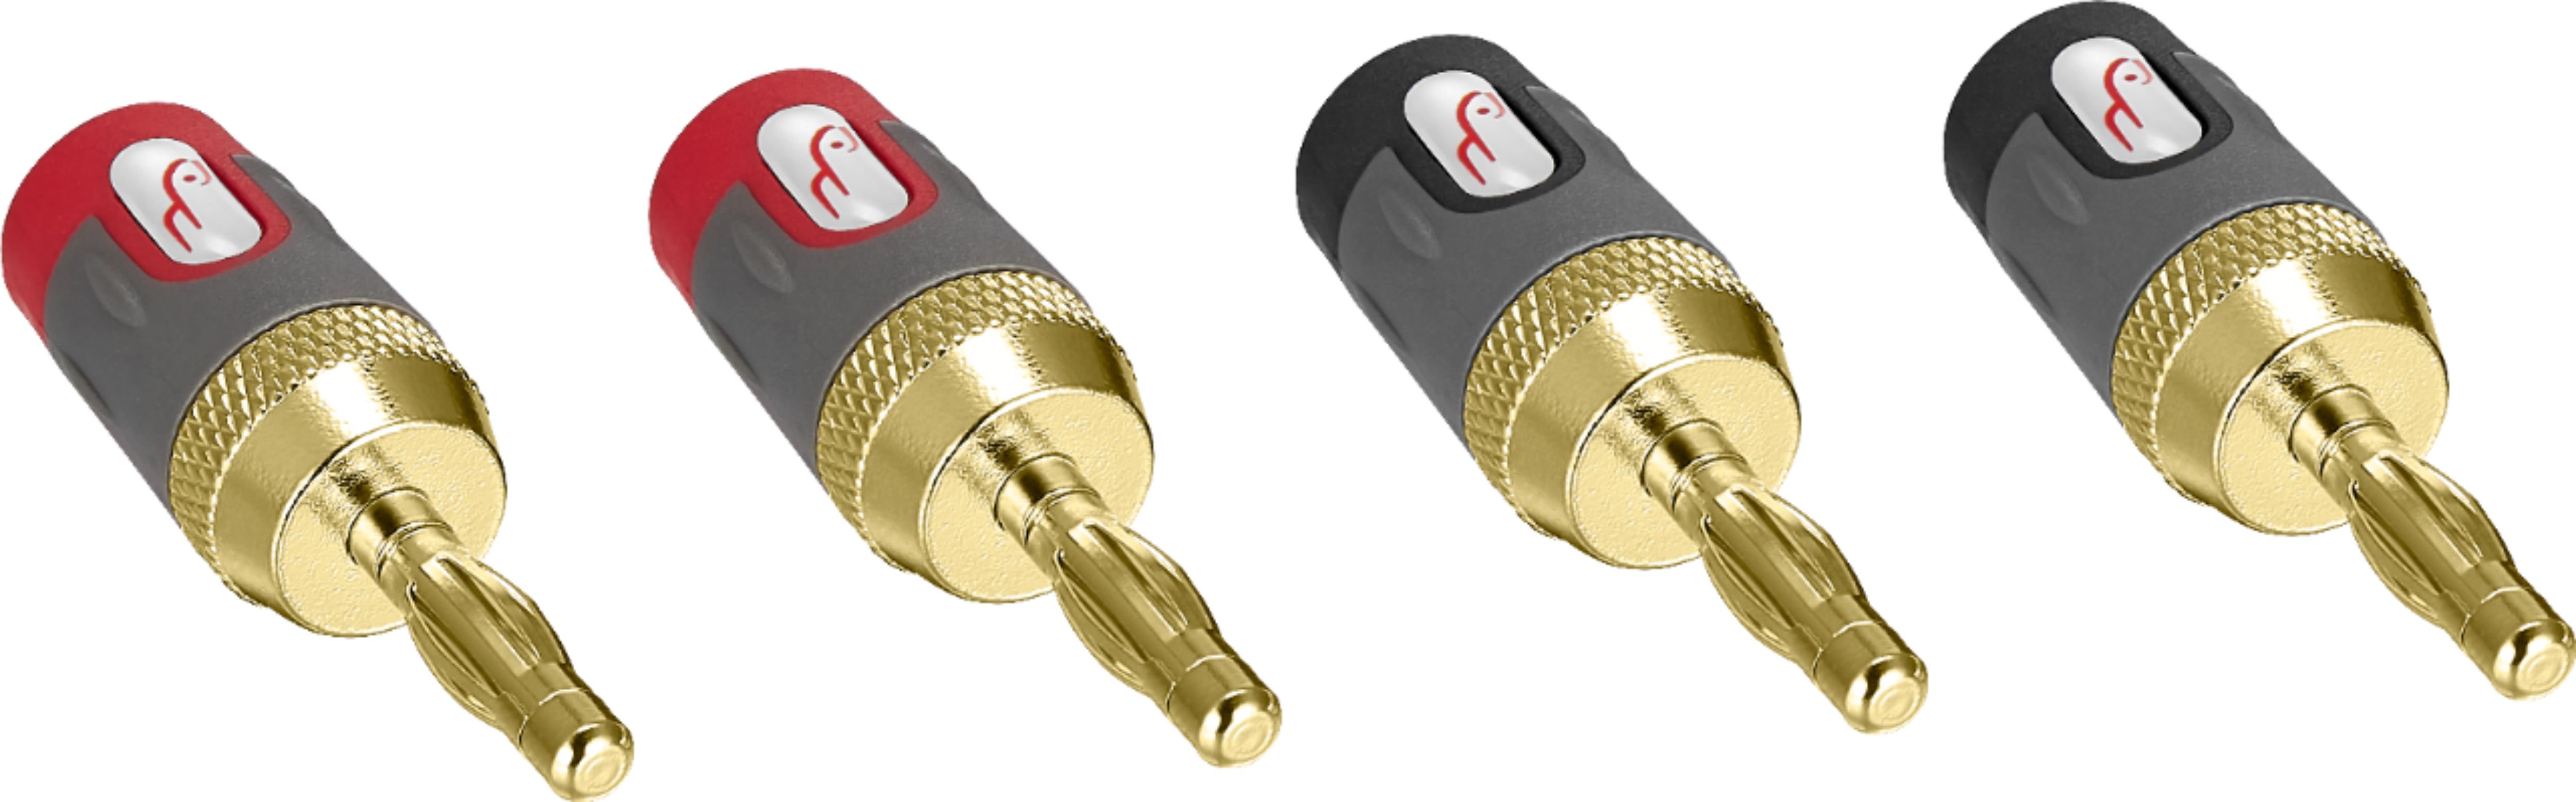 Left View: Rocketfish™ - 24k Gold Plated Toolless Speaker Banana Plugs (4 Pack) - Red/Black